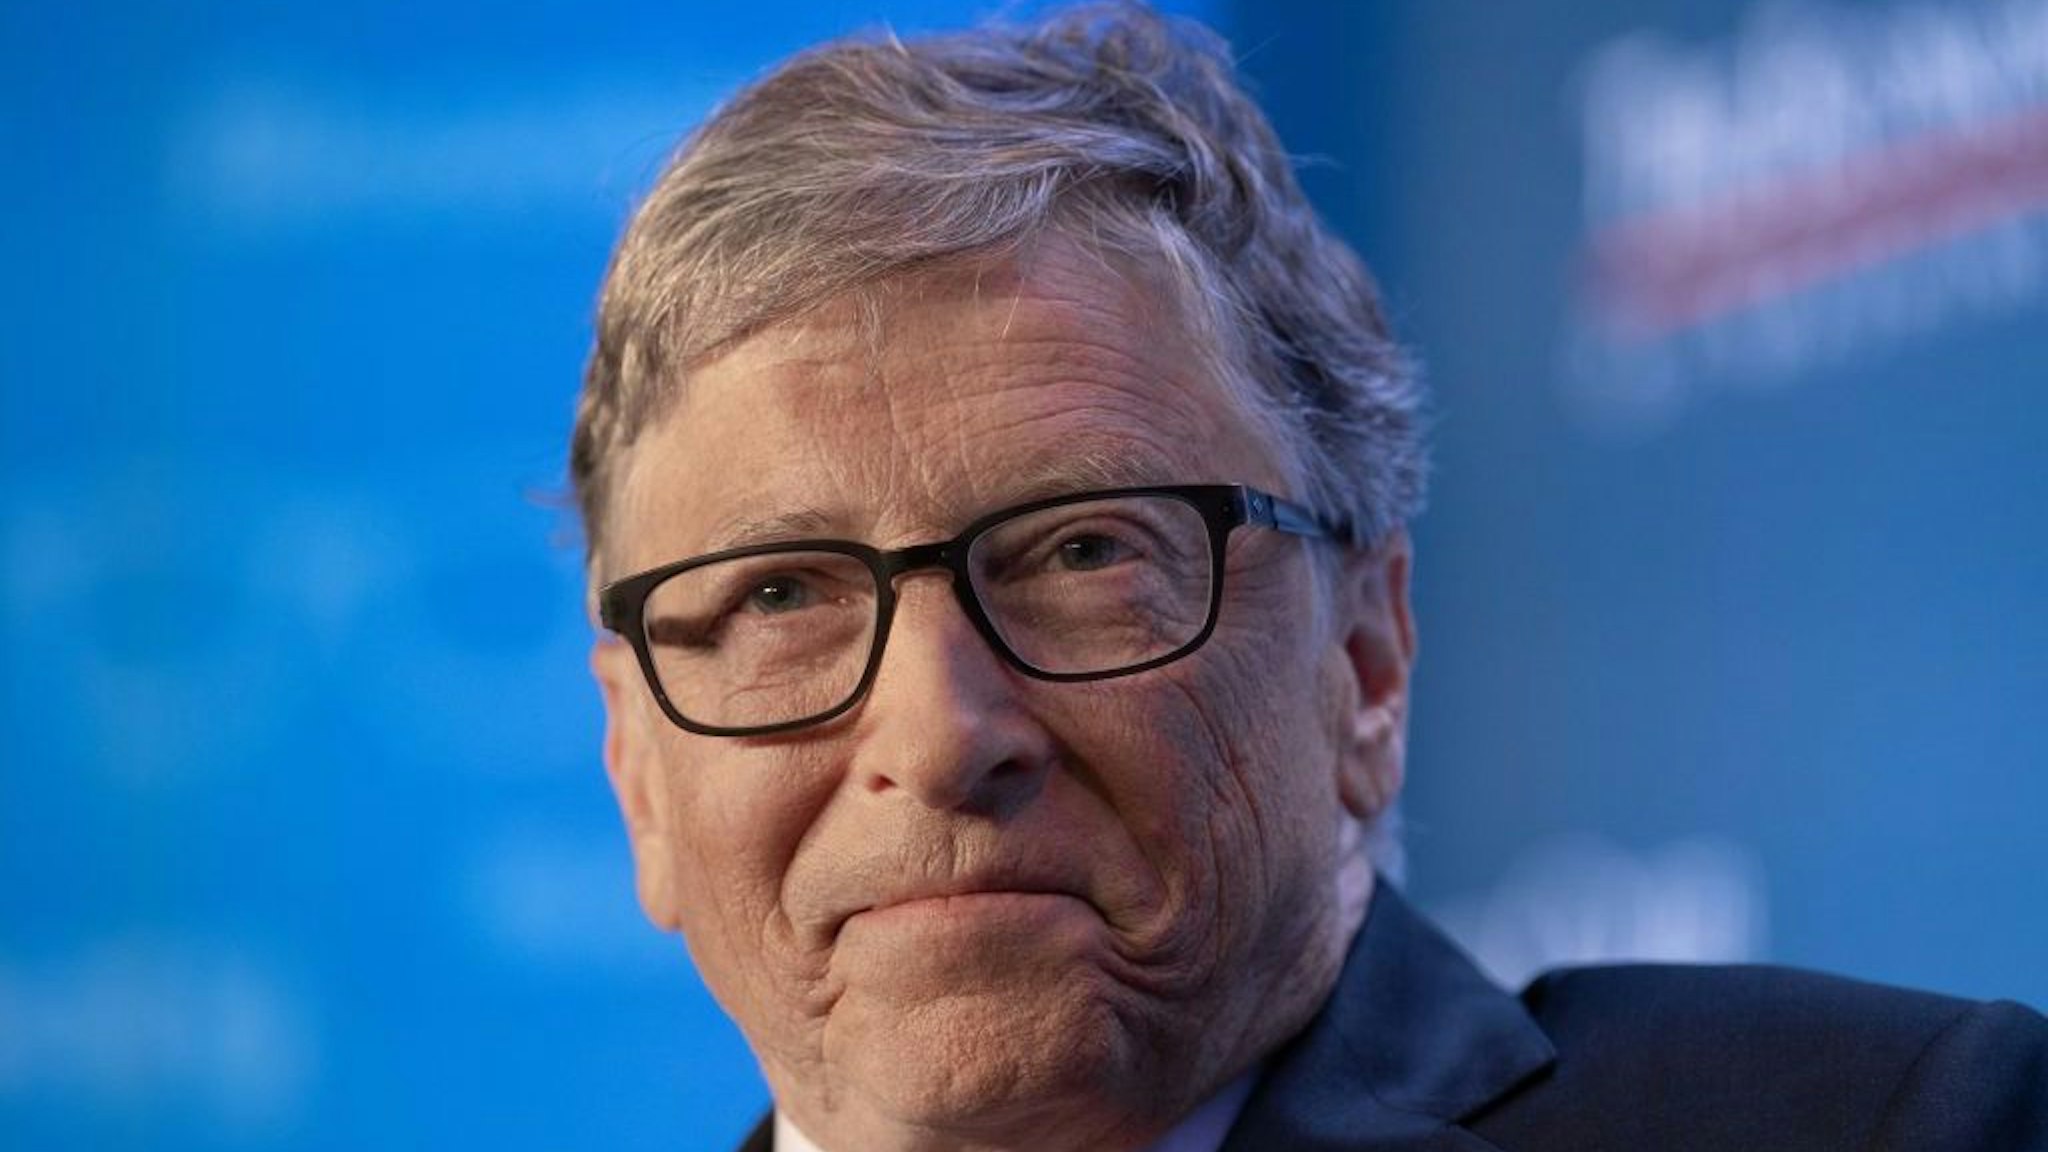 Microsoft co-founder Bill Gates speaks at the Economic Club of Washington's summer luncheon in Washington, DC, on June 24, 2019. (Photo by NICHOLAS KAMM / AFP) (Photo by NICHOLAS KAMM/AFP via Getty Images)